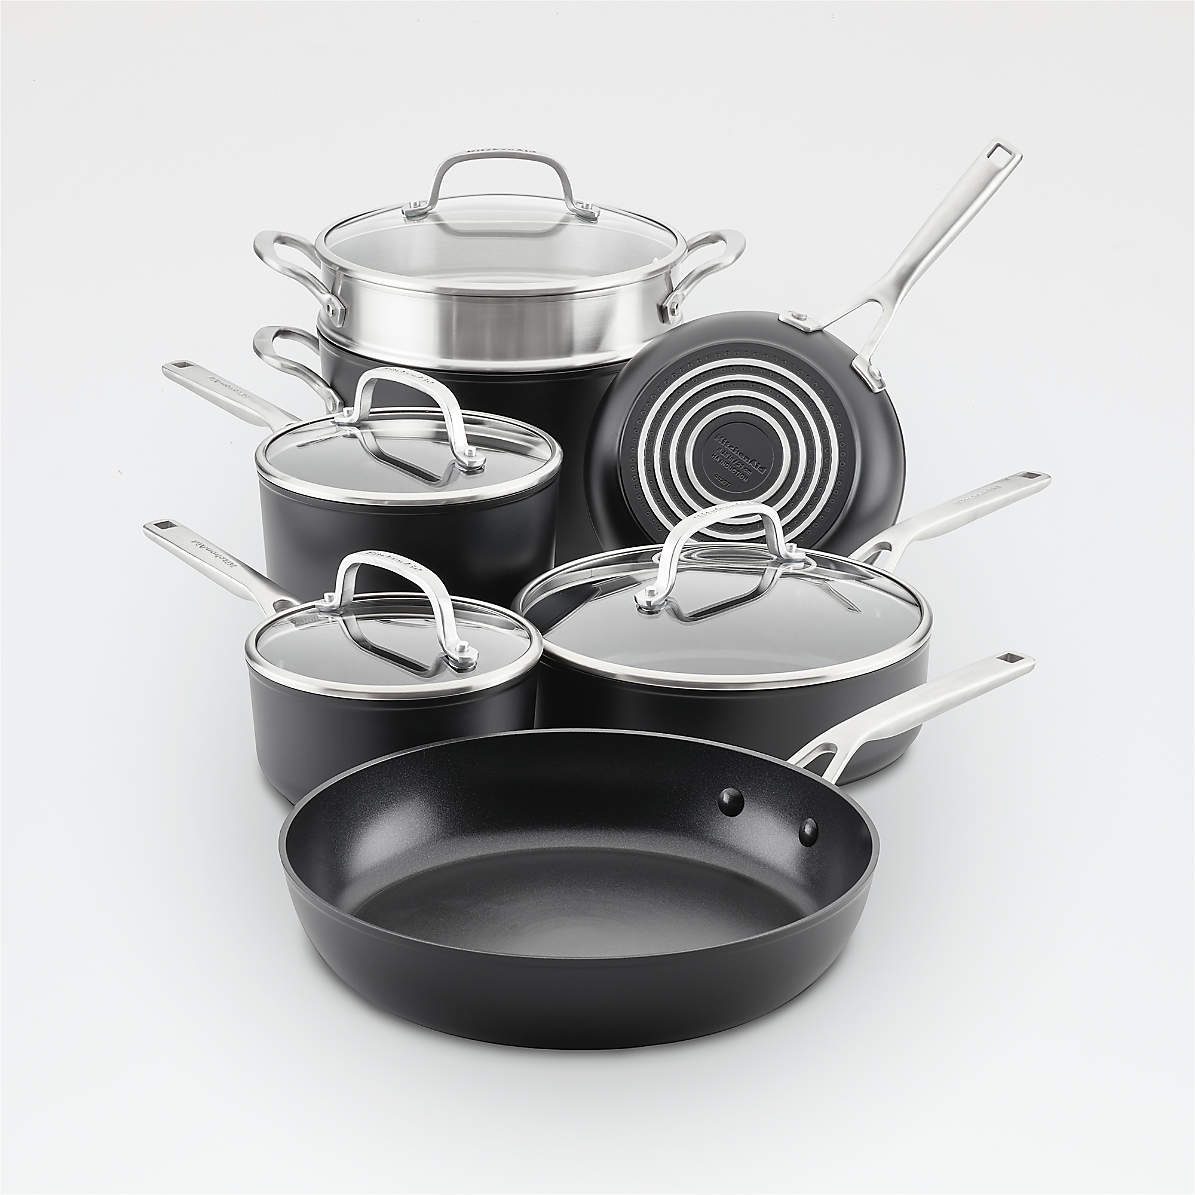 Choice 6-Piece Aluminum Cookware Set with 3.75 Qt. Sauce Pan, 5 Qt